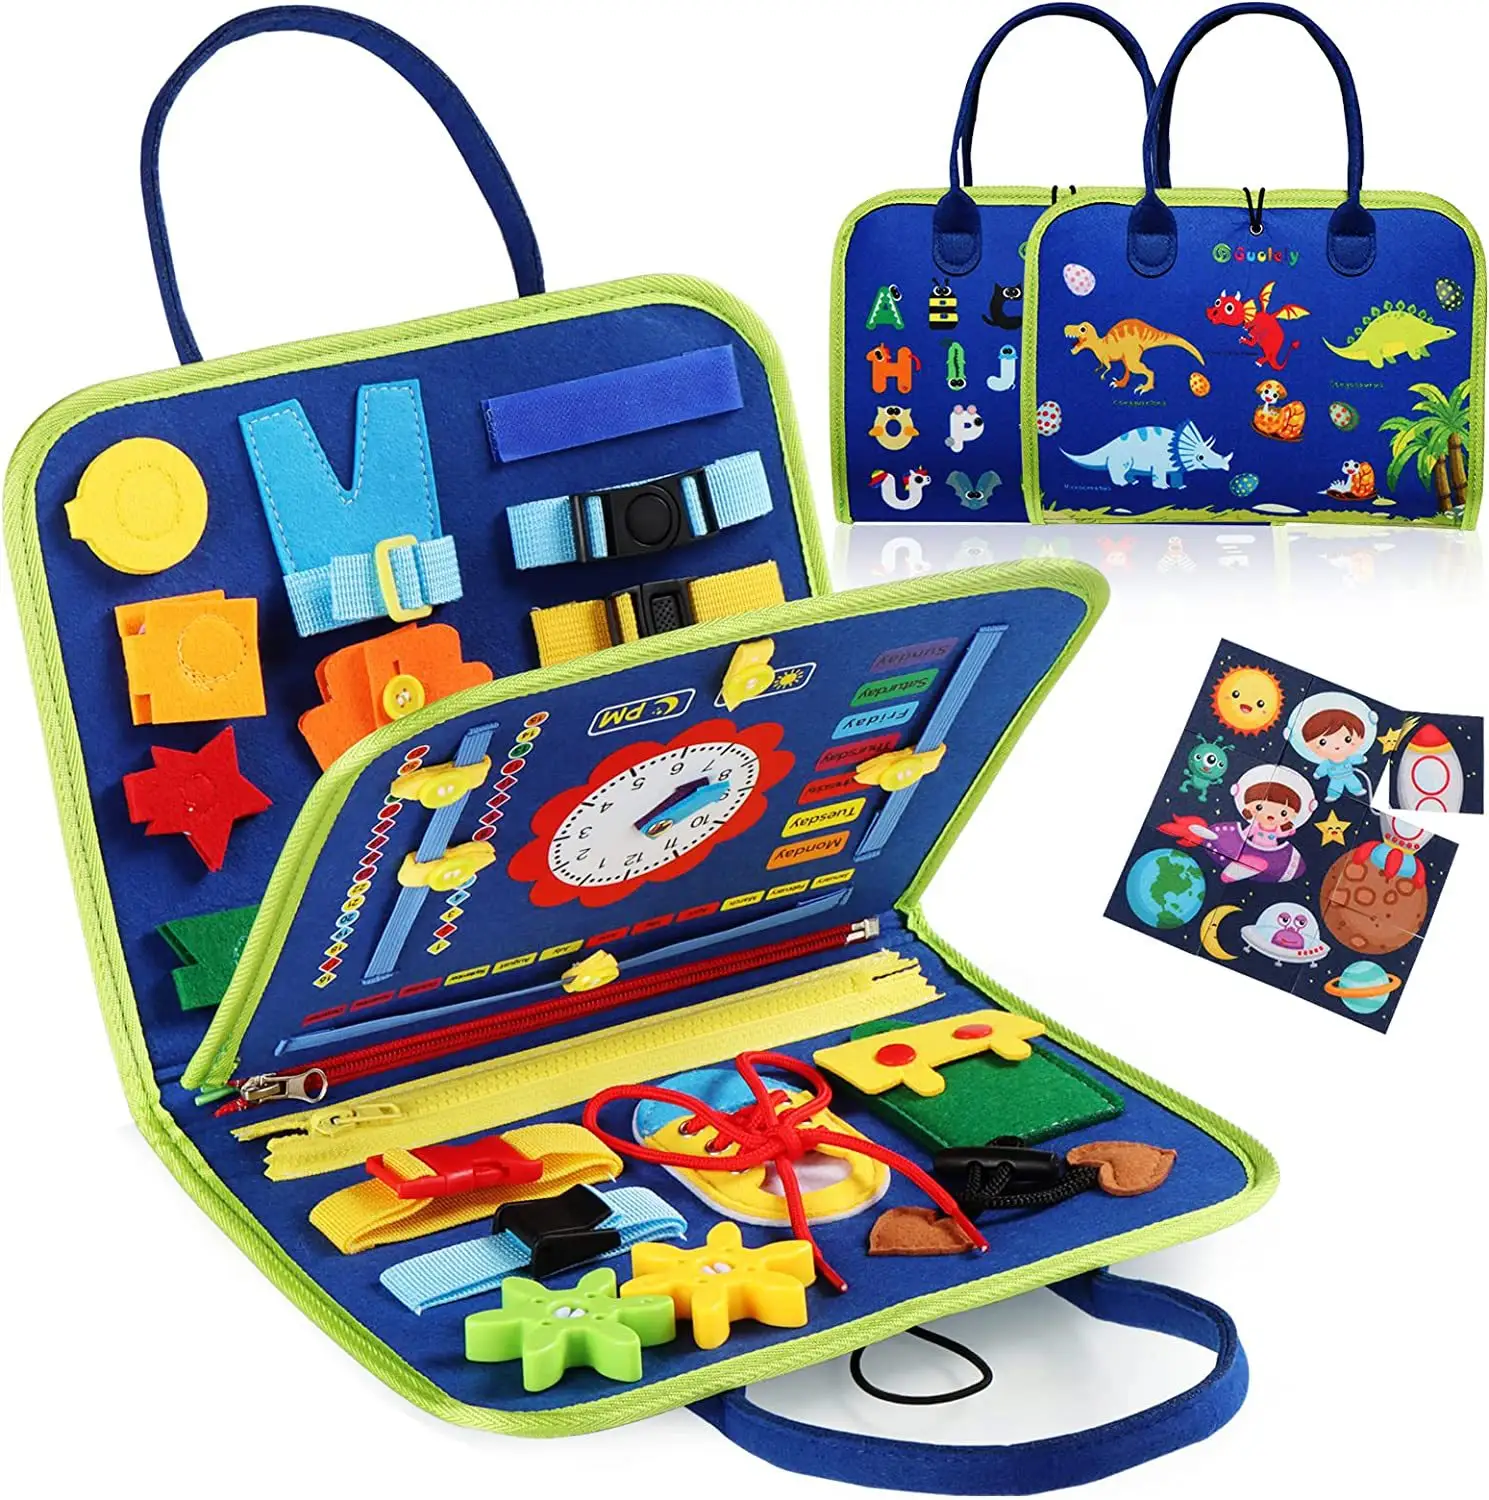 Mainan pendidikan Montessori warna-warni buku Felt mainan anak-anak populer tas sibuk kualitas tinggi merasa papan sibuk mainan berbentuk dinosaurus baru